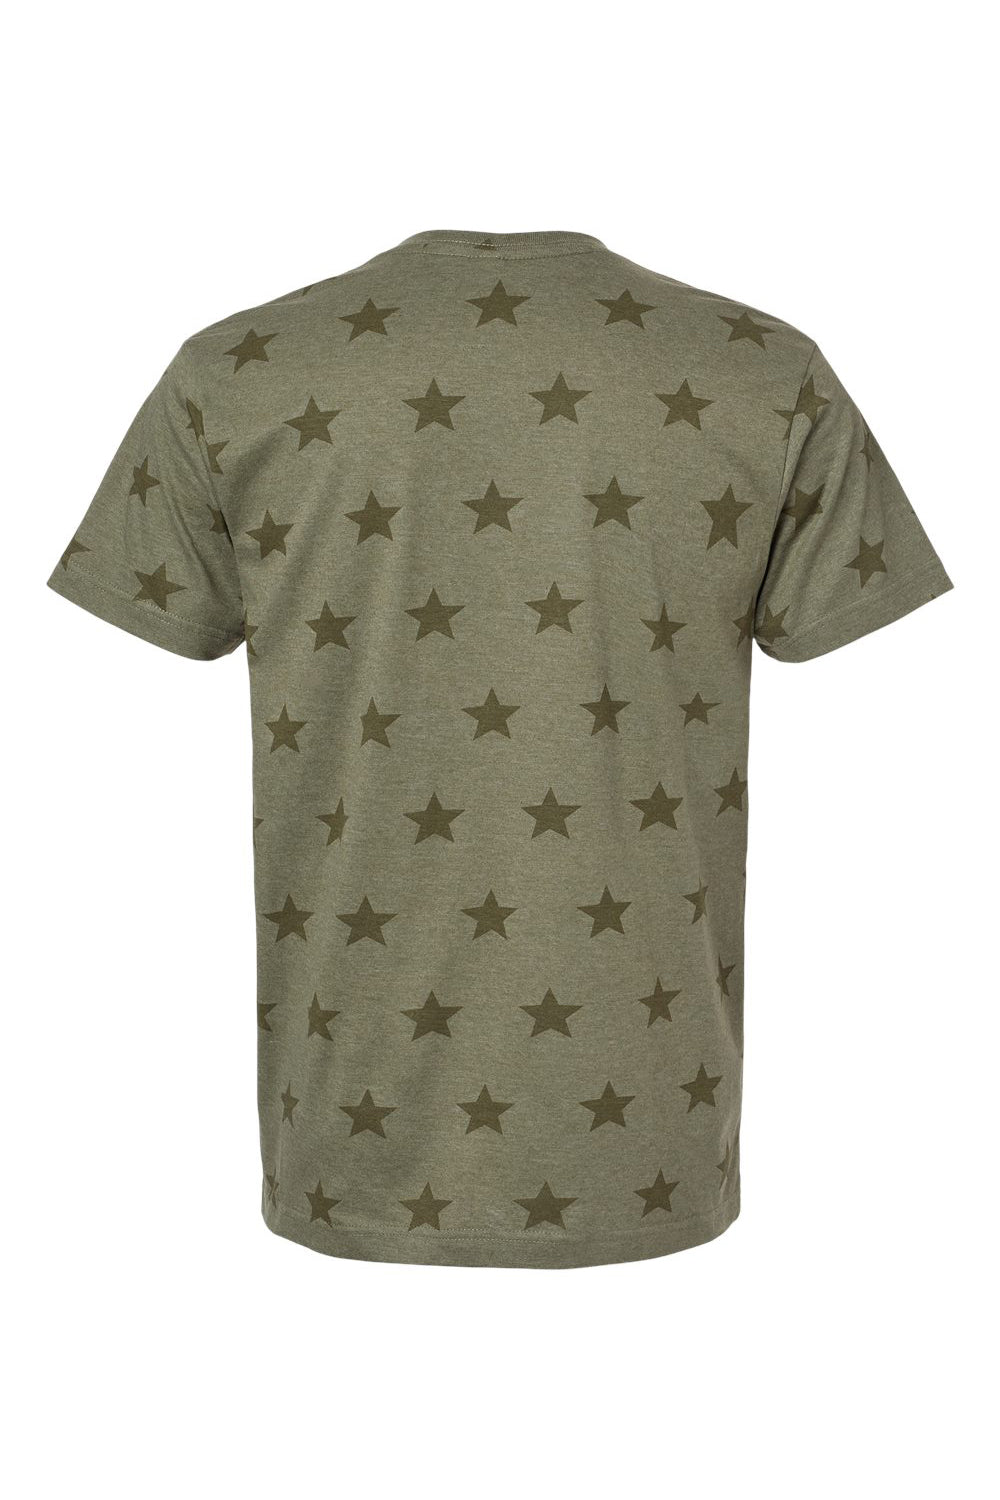 Code Five 3929 Mens Star Print Short Sleeve Crewneck T-Shirt Military Green Flat Back